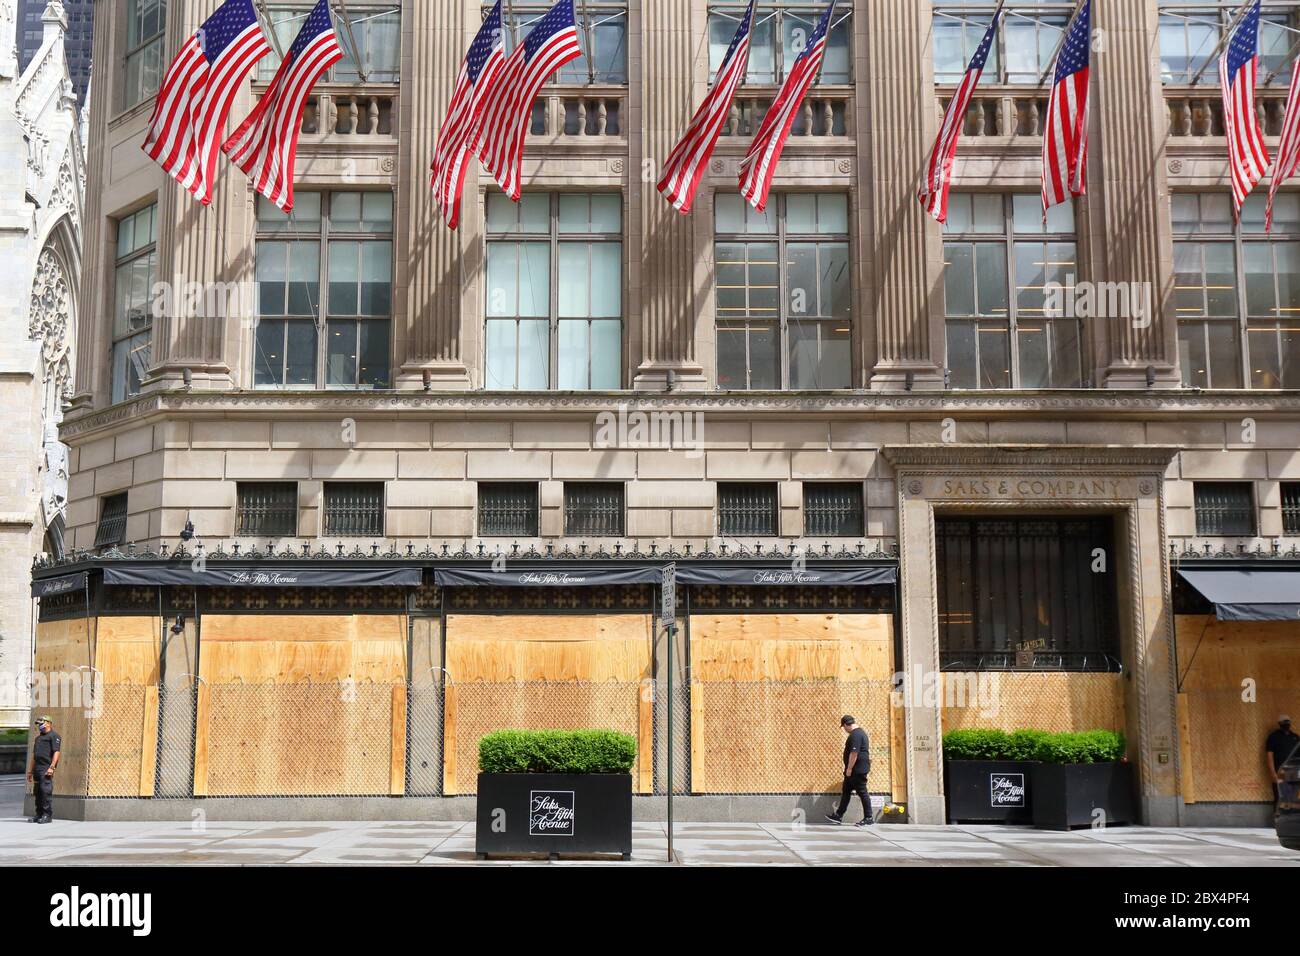 Saks Manhattan Flagship Sees Value Plummet in Retail Apocalypse - Bloomberg